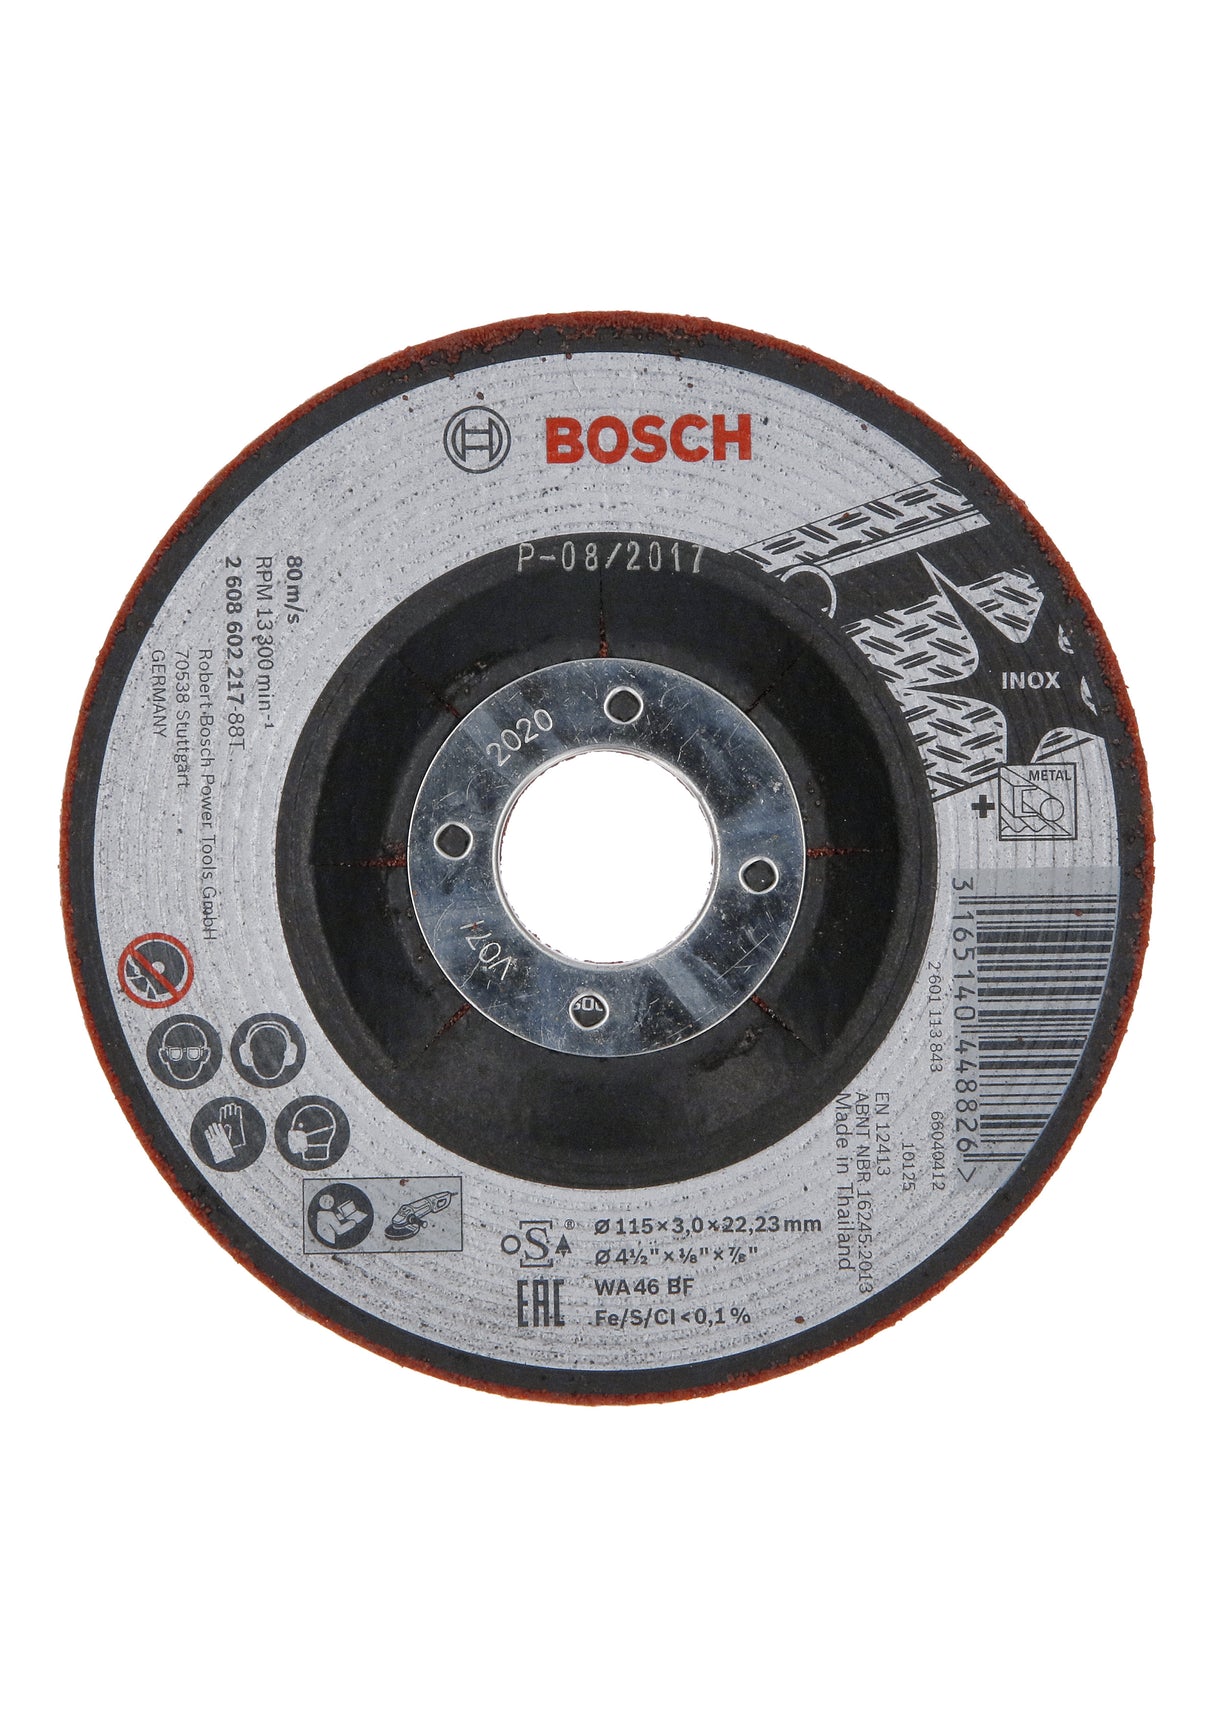 Bosch Professional Semi-Flexible Grinding Disc WA 46 BF - 115mm x 3.0mm